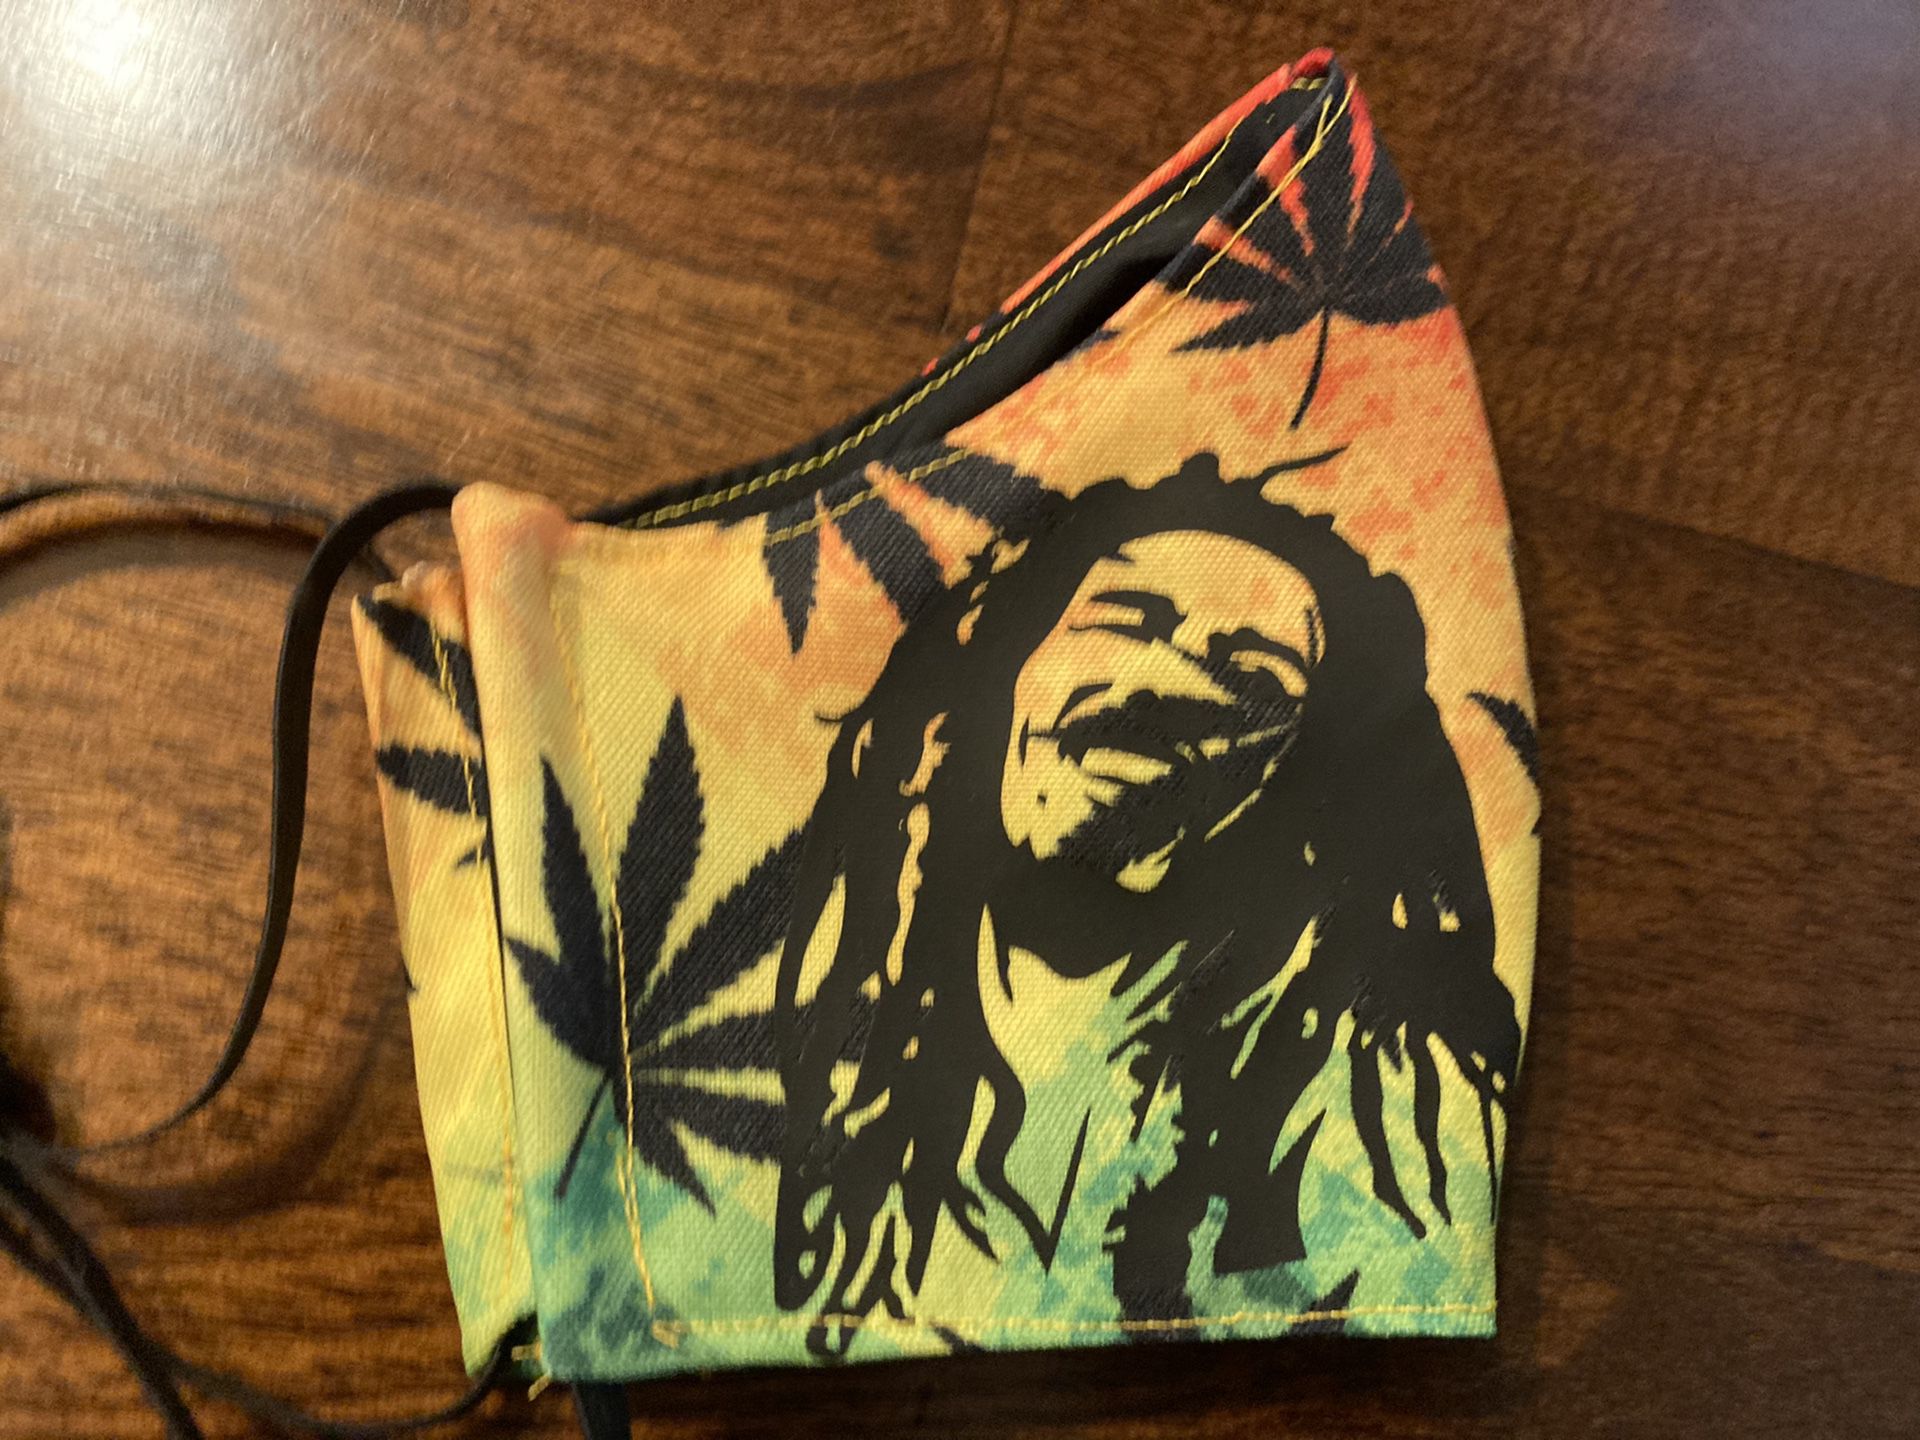 Bob Marley face mask